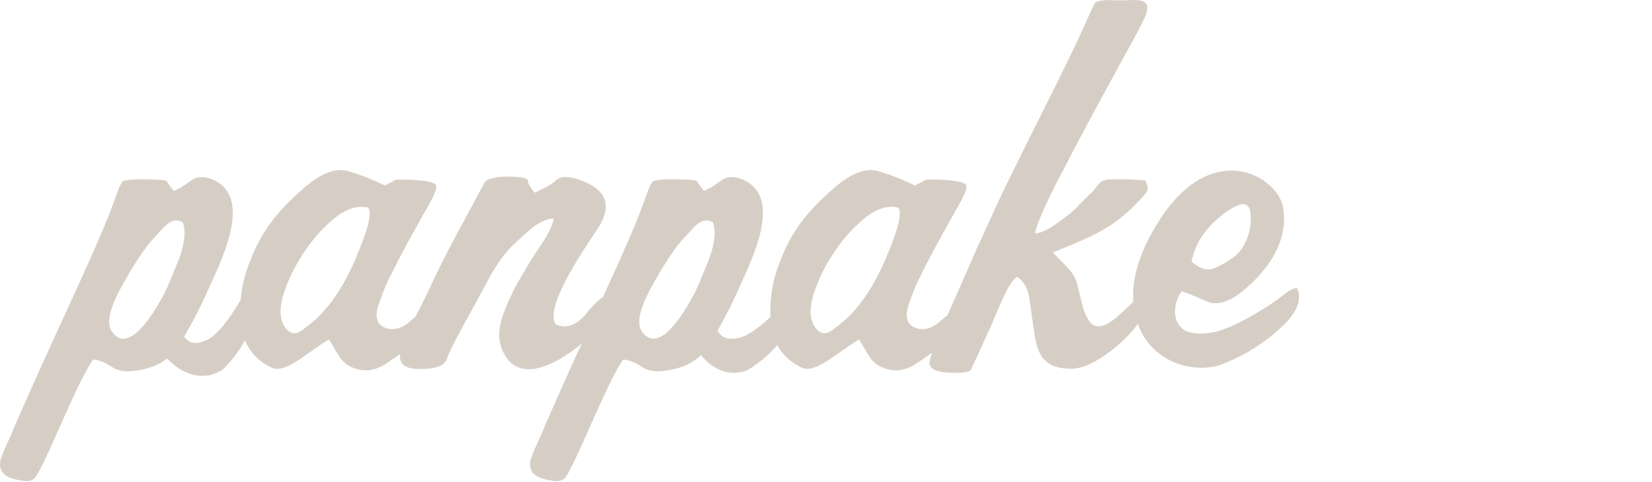 Panpake | Custom HTML Email Development